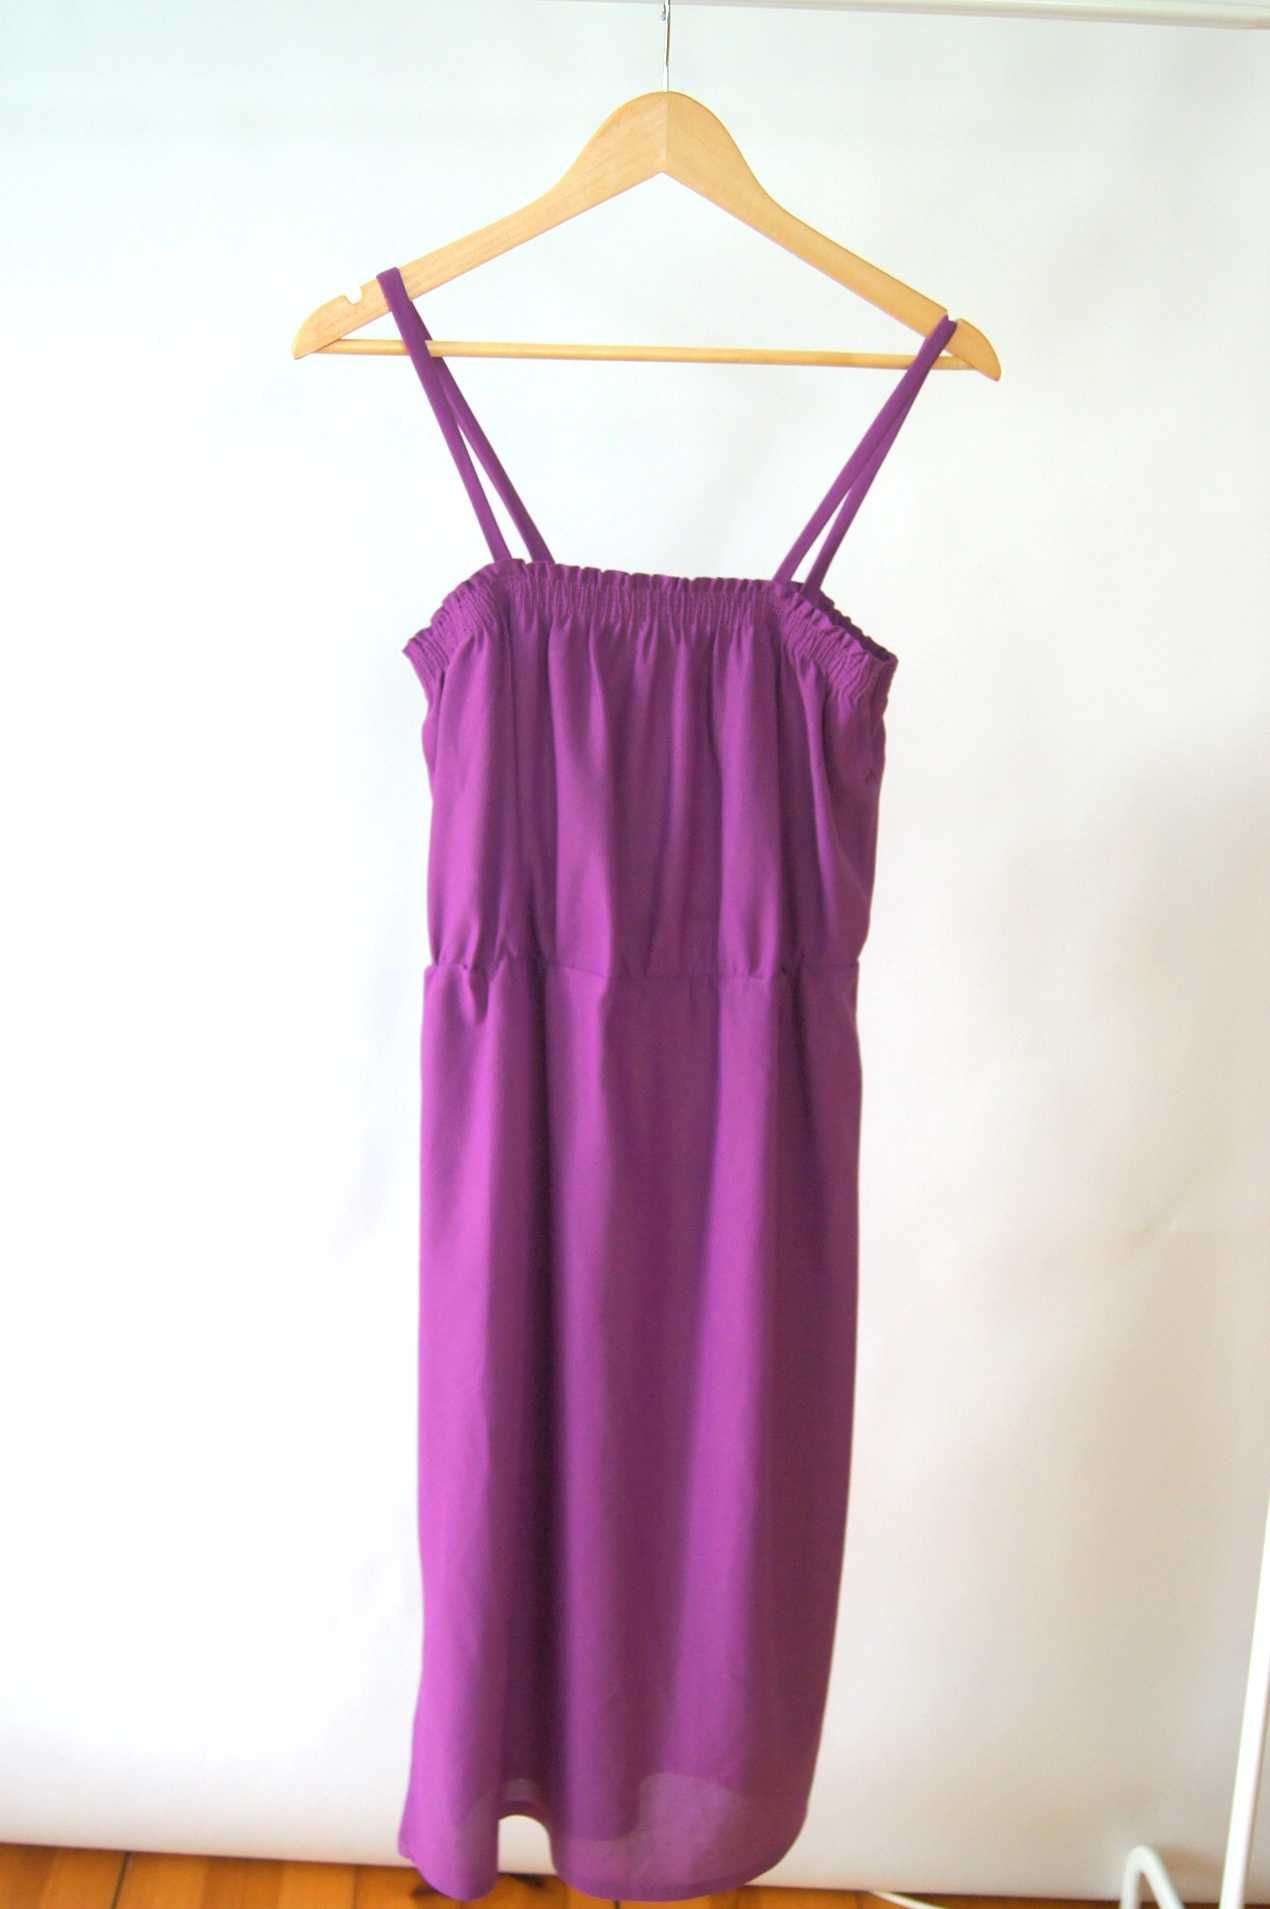 letnia prosta fioletowa sukienka na ramiączkach 38M 40L fuksja purpura